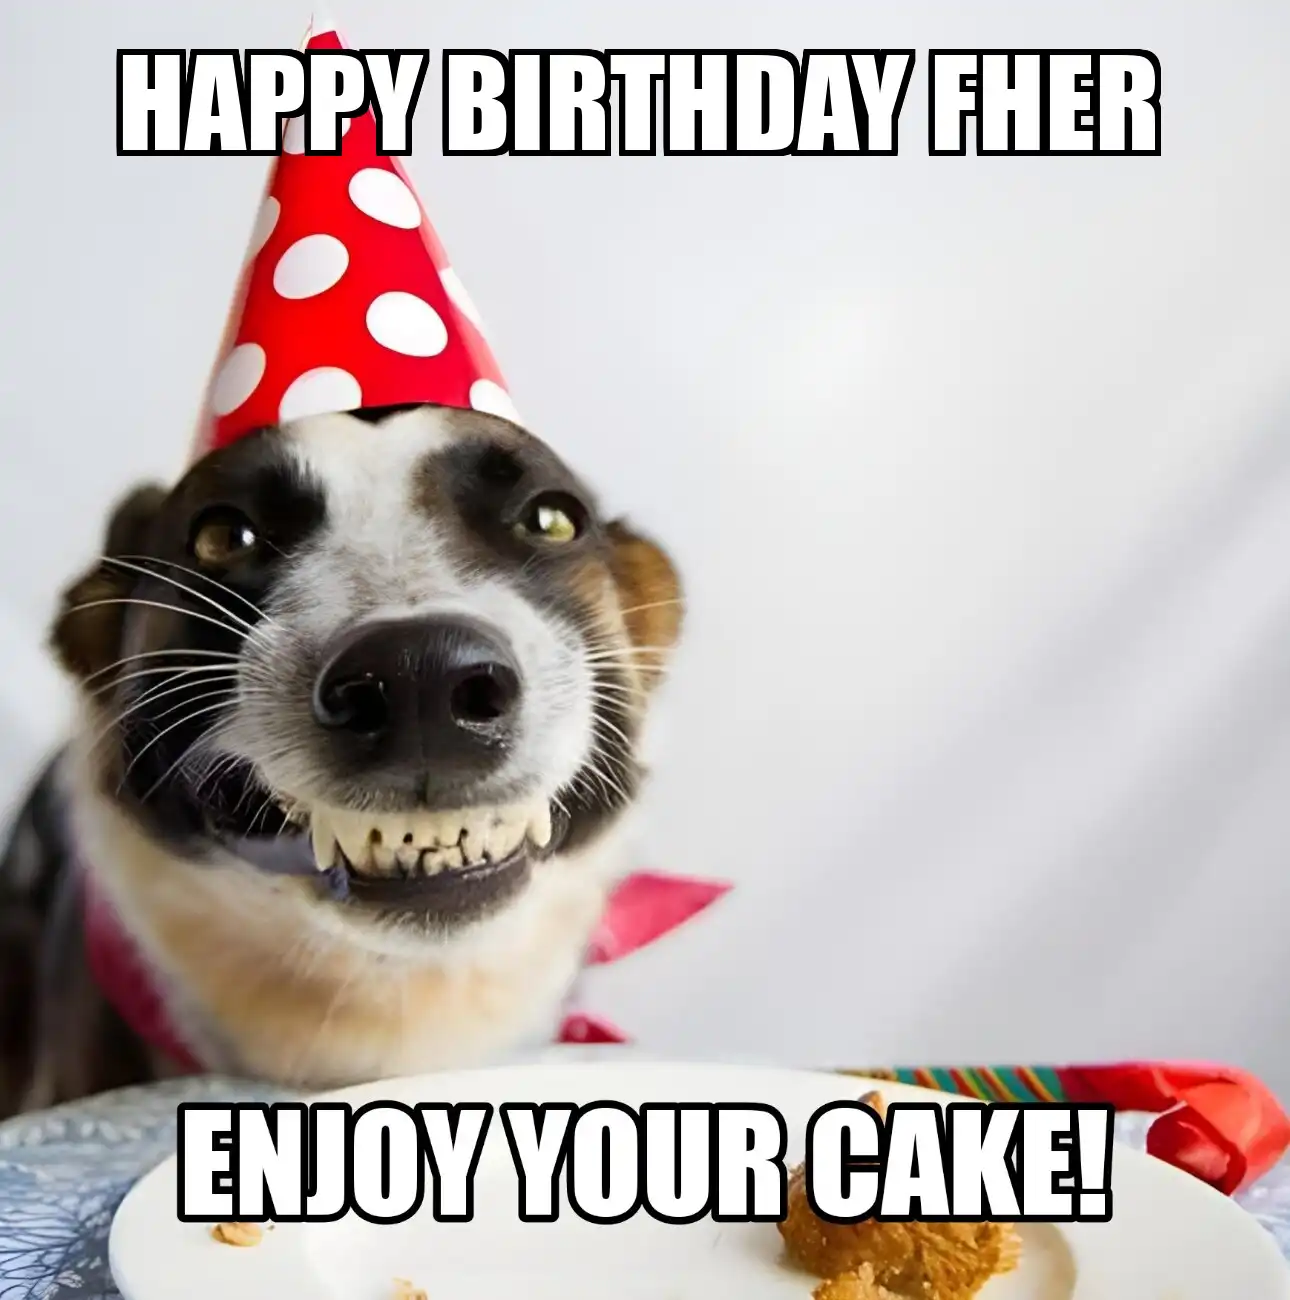 Happy Birthday Fher Enjoy Your Cake Dog Meme